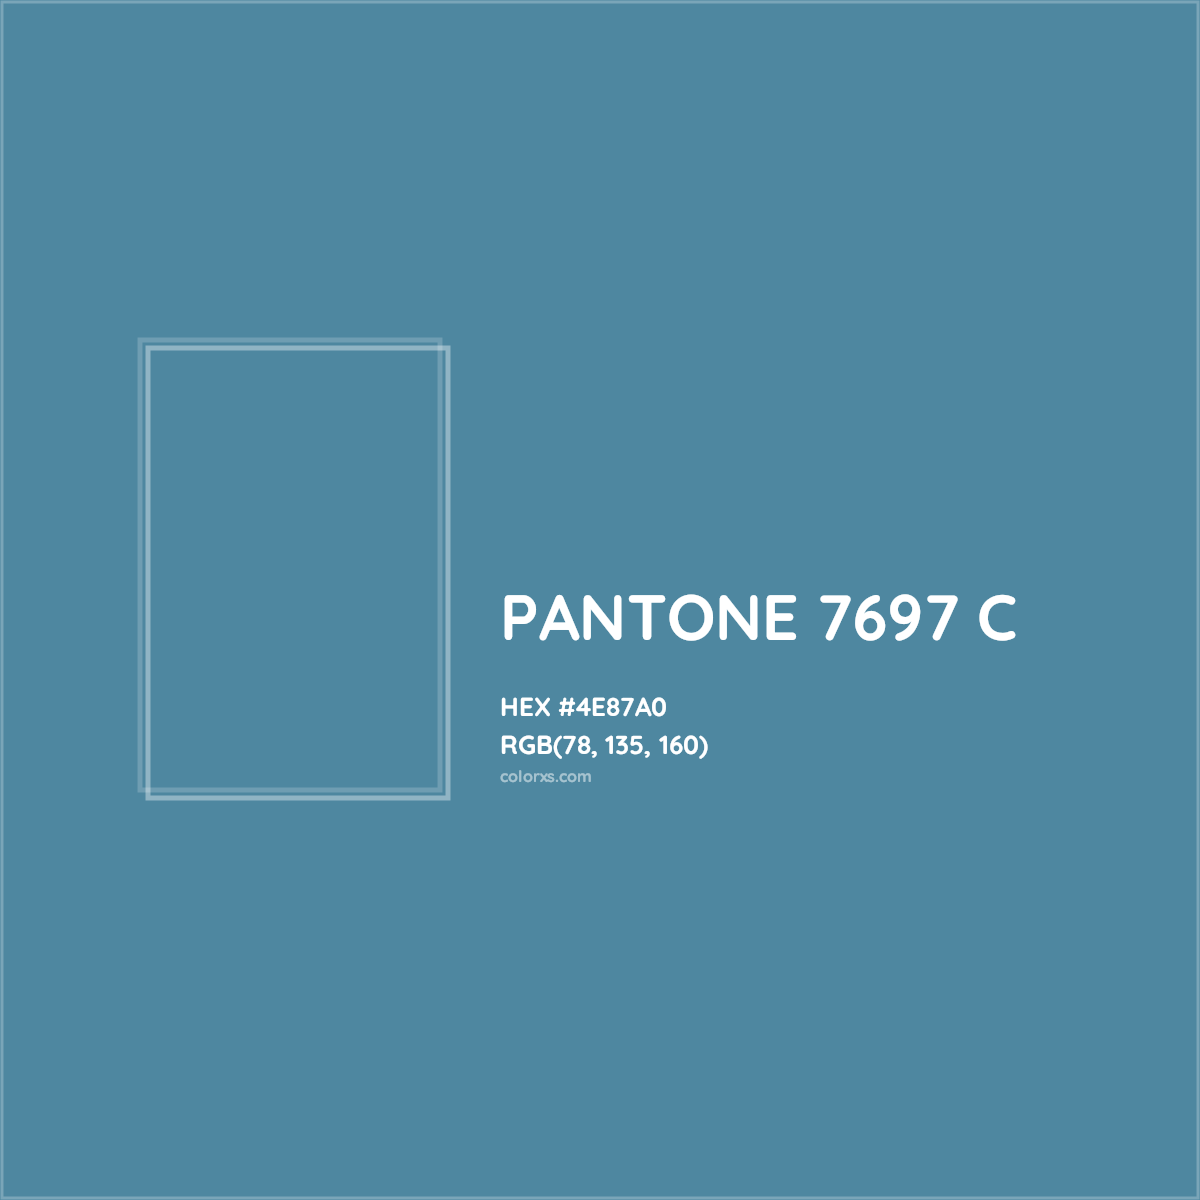 HEX #4E87A0 PANTONE 7697 C CMS Pantone PMS - Color Code